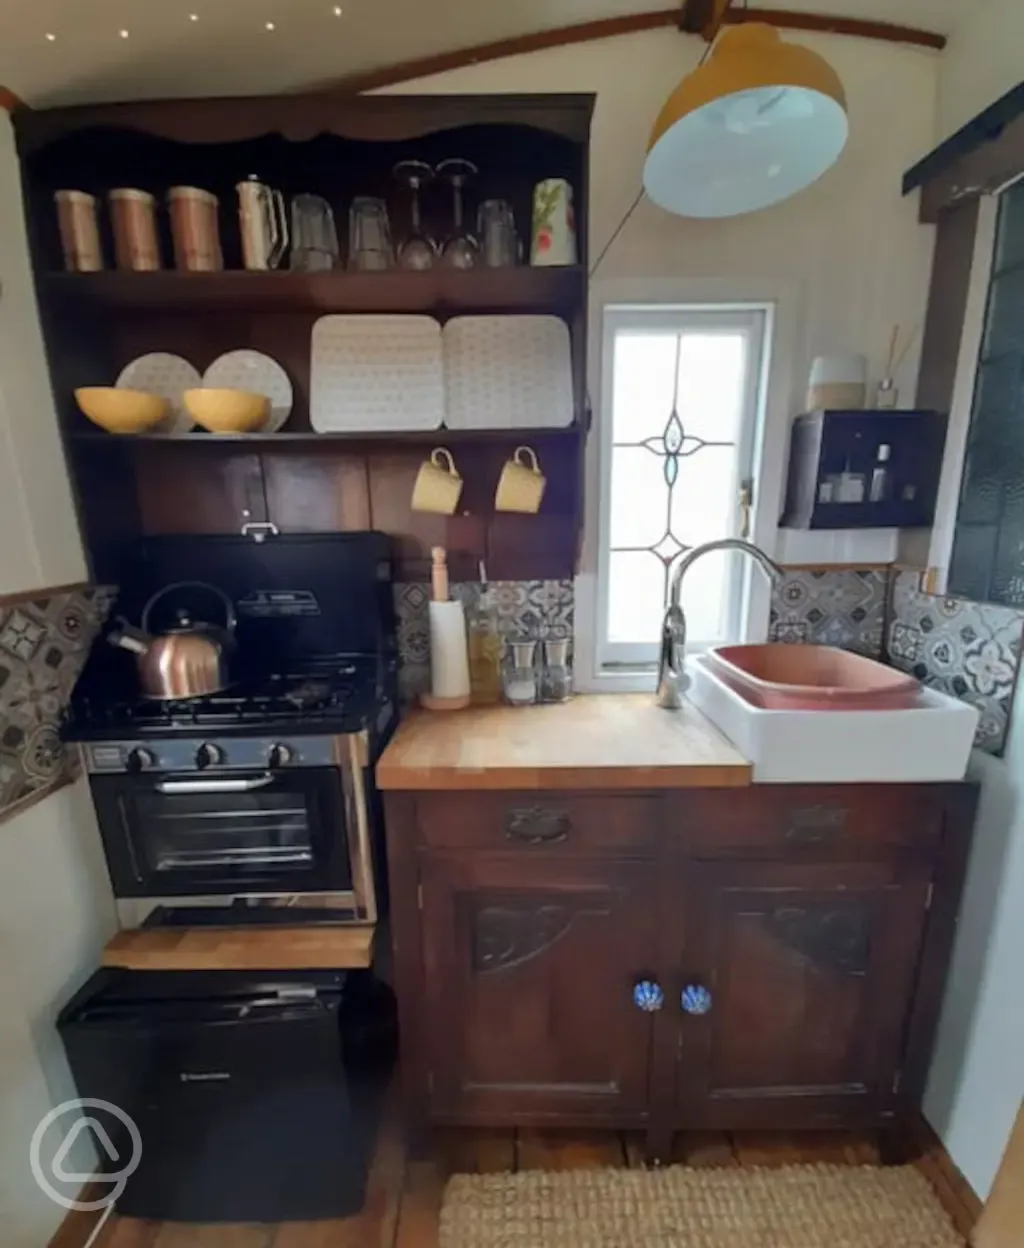 Dreckly Hut kitchen facilities